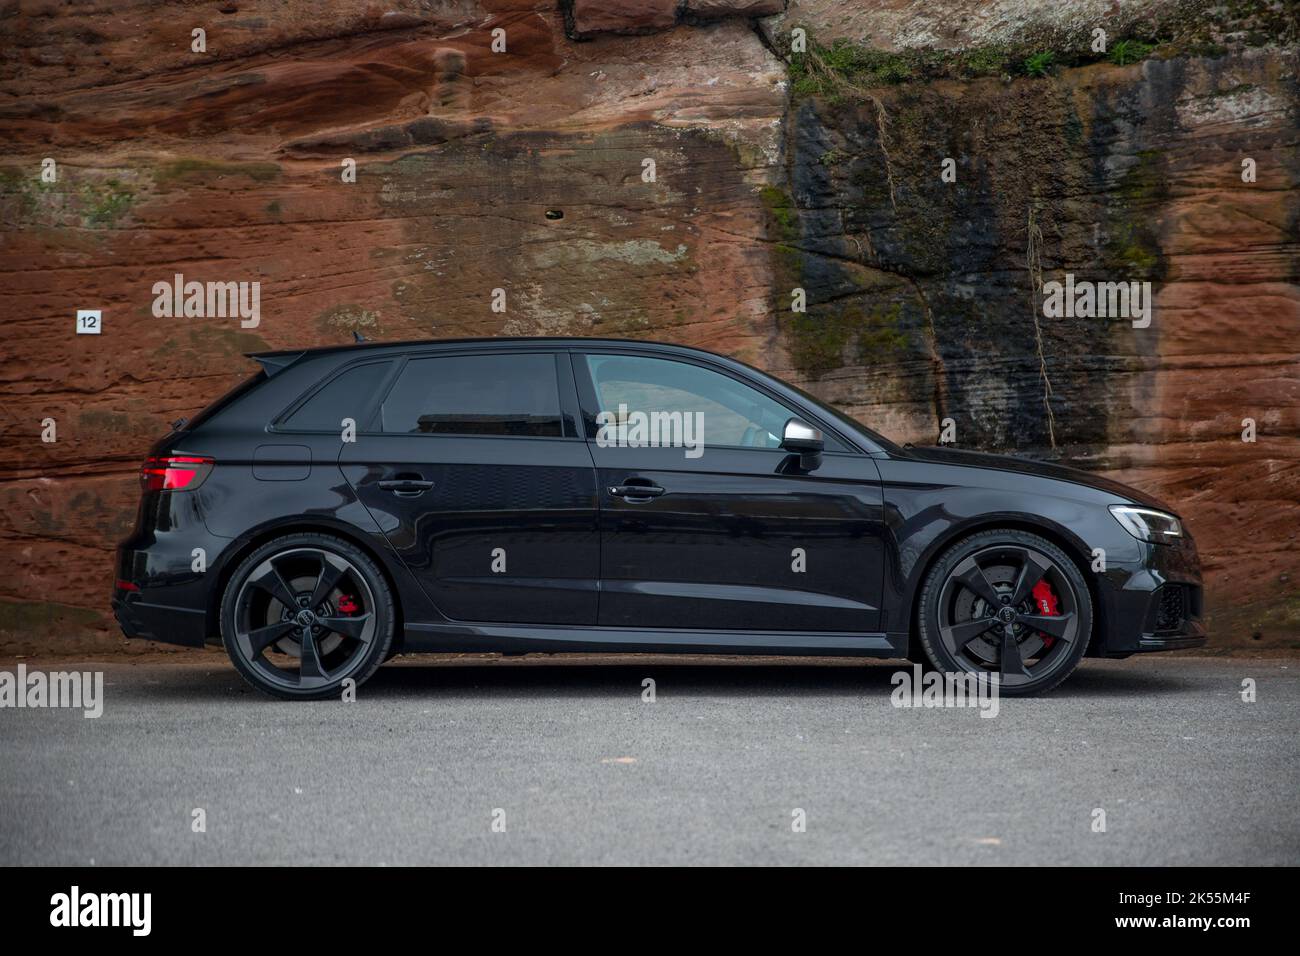 Hatchback audi immagini e fotografie stock ad alta risoluzione - Alamy